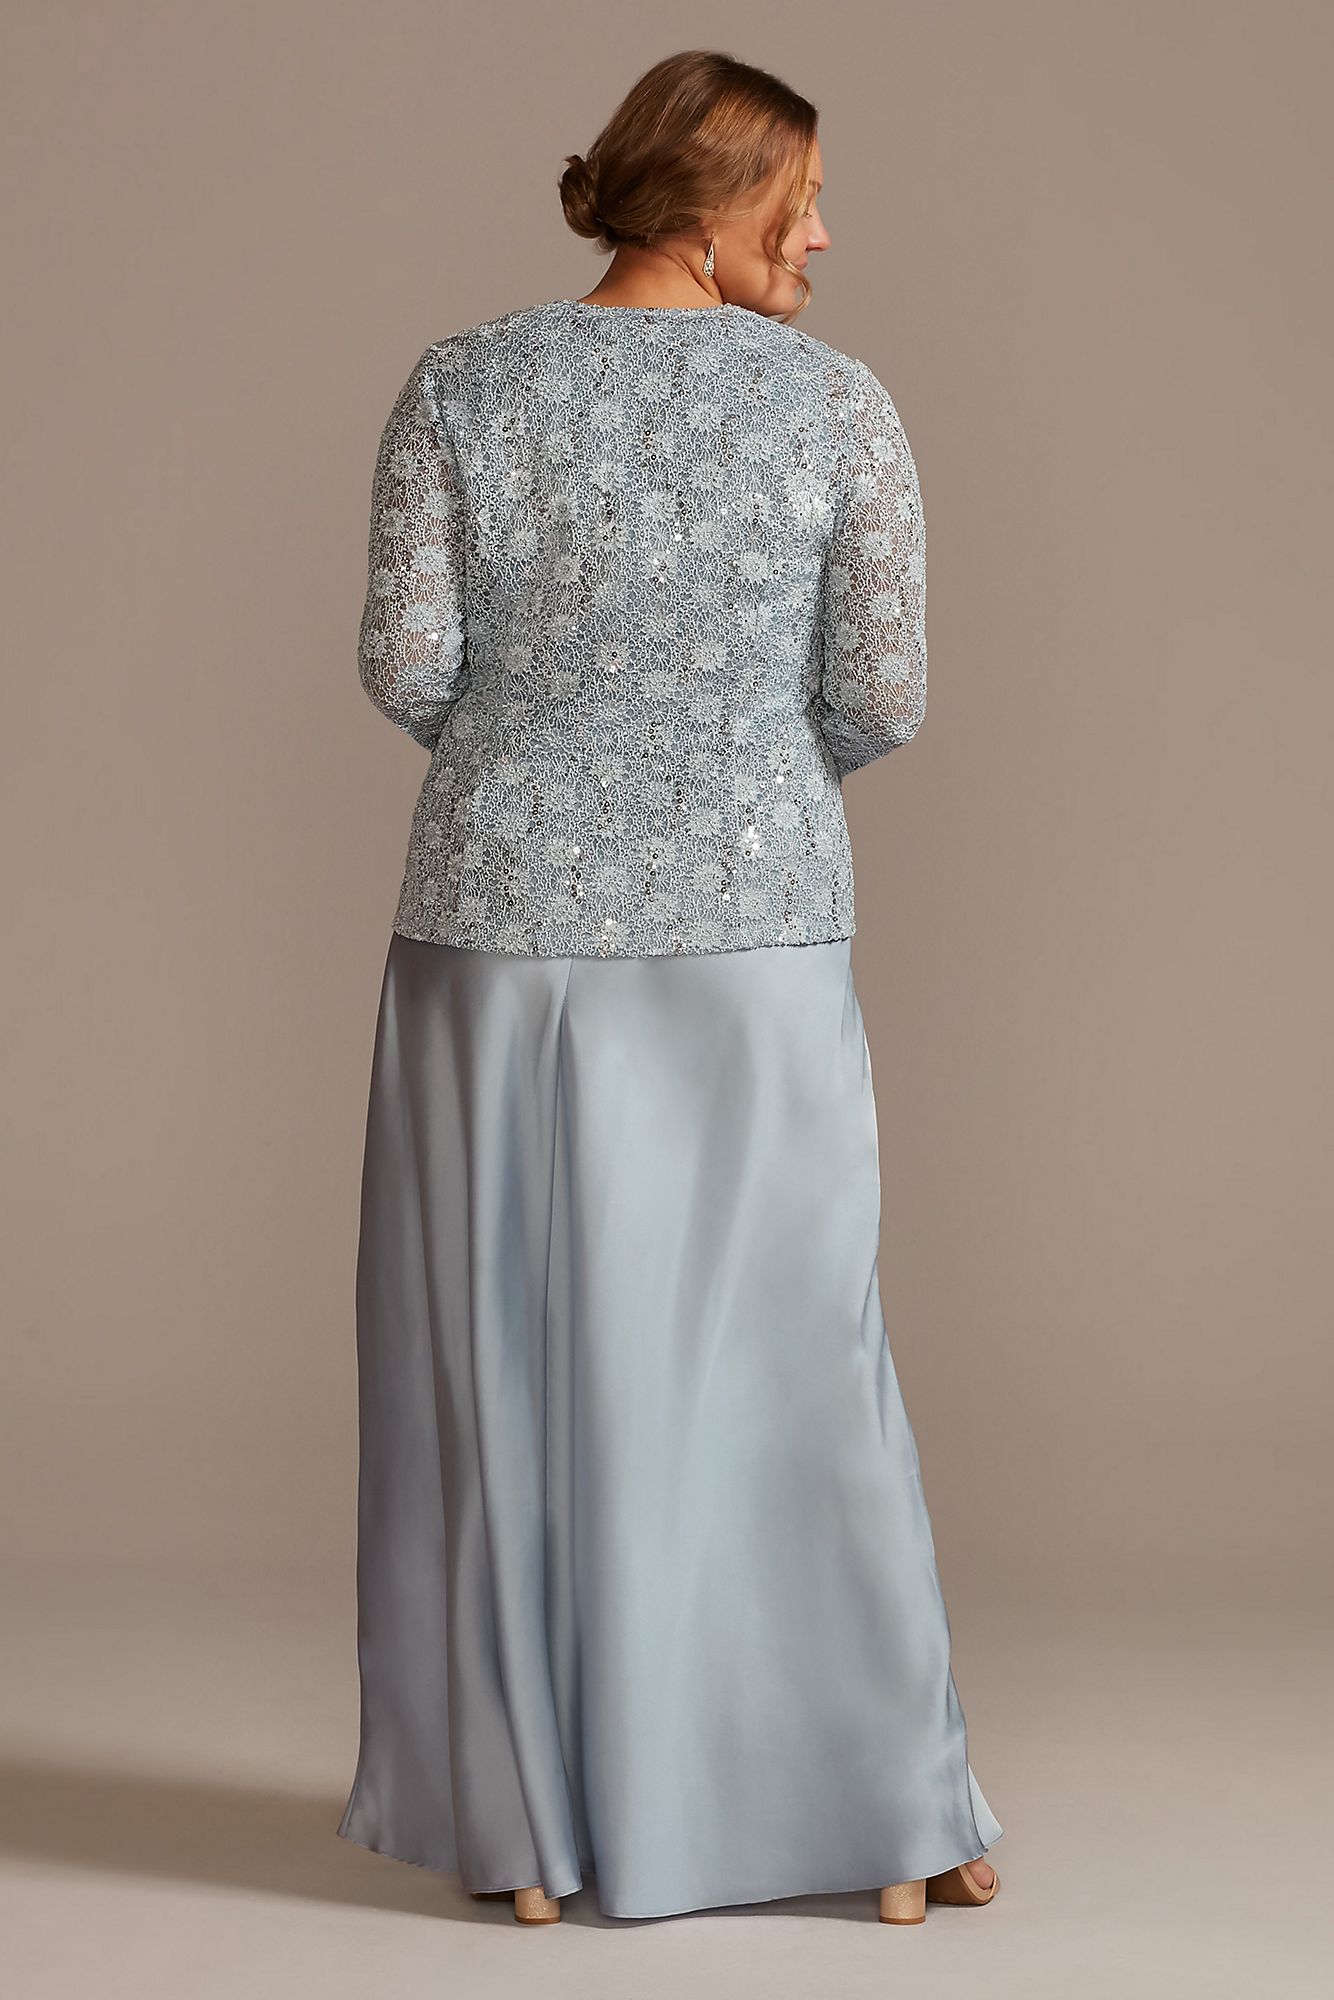 Lace Bodice and Jacket Flowy A-Line Plus Dress RM Richards 7739W